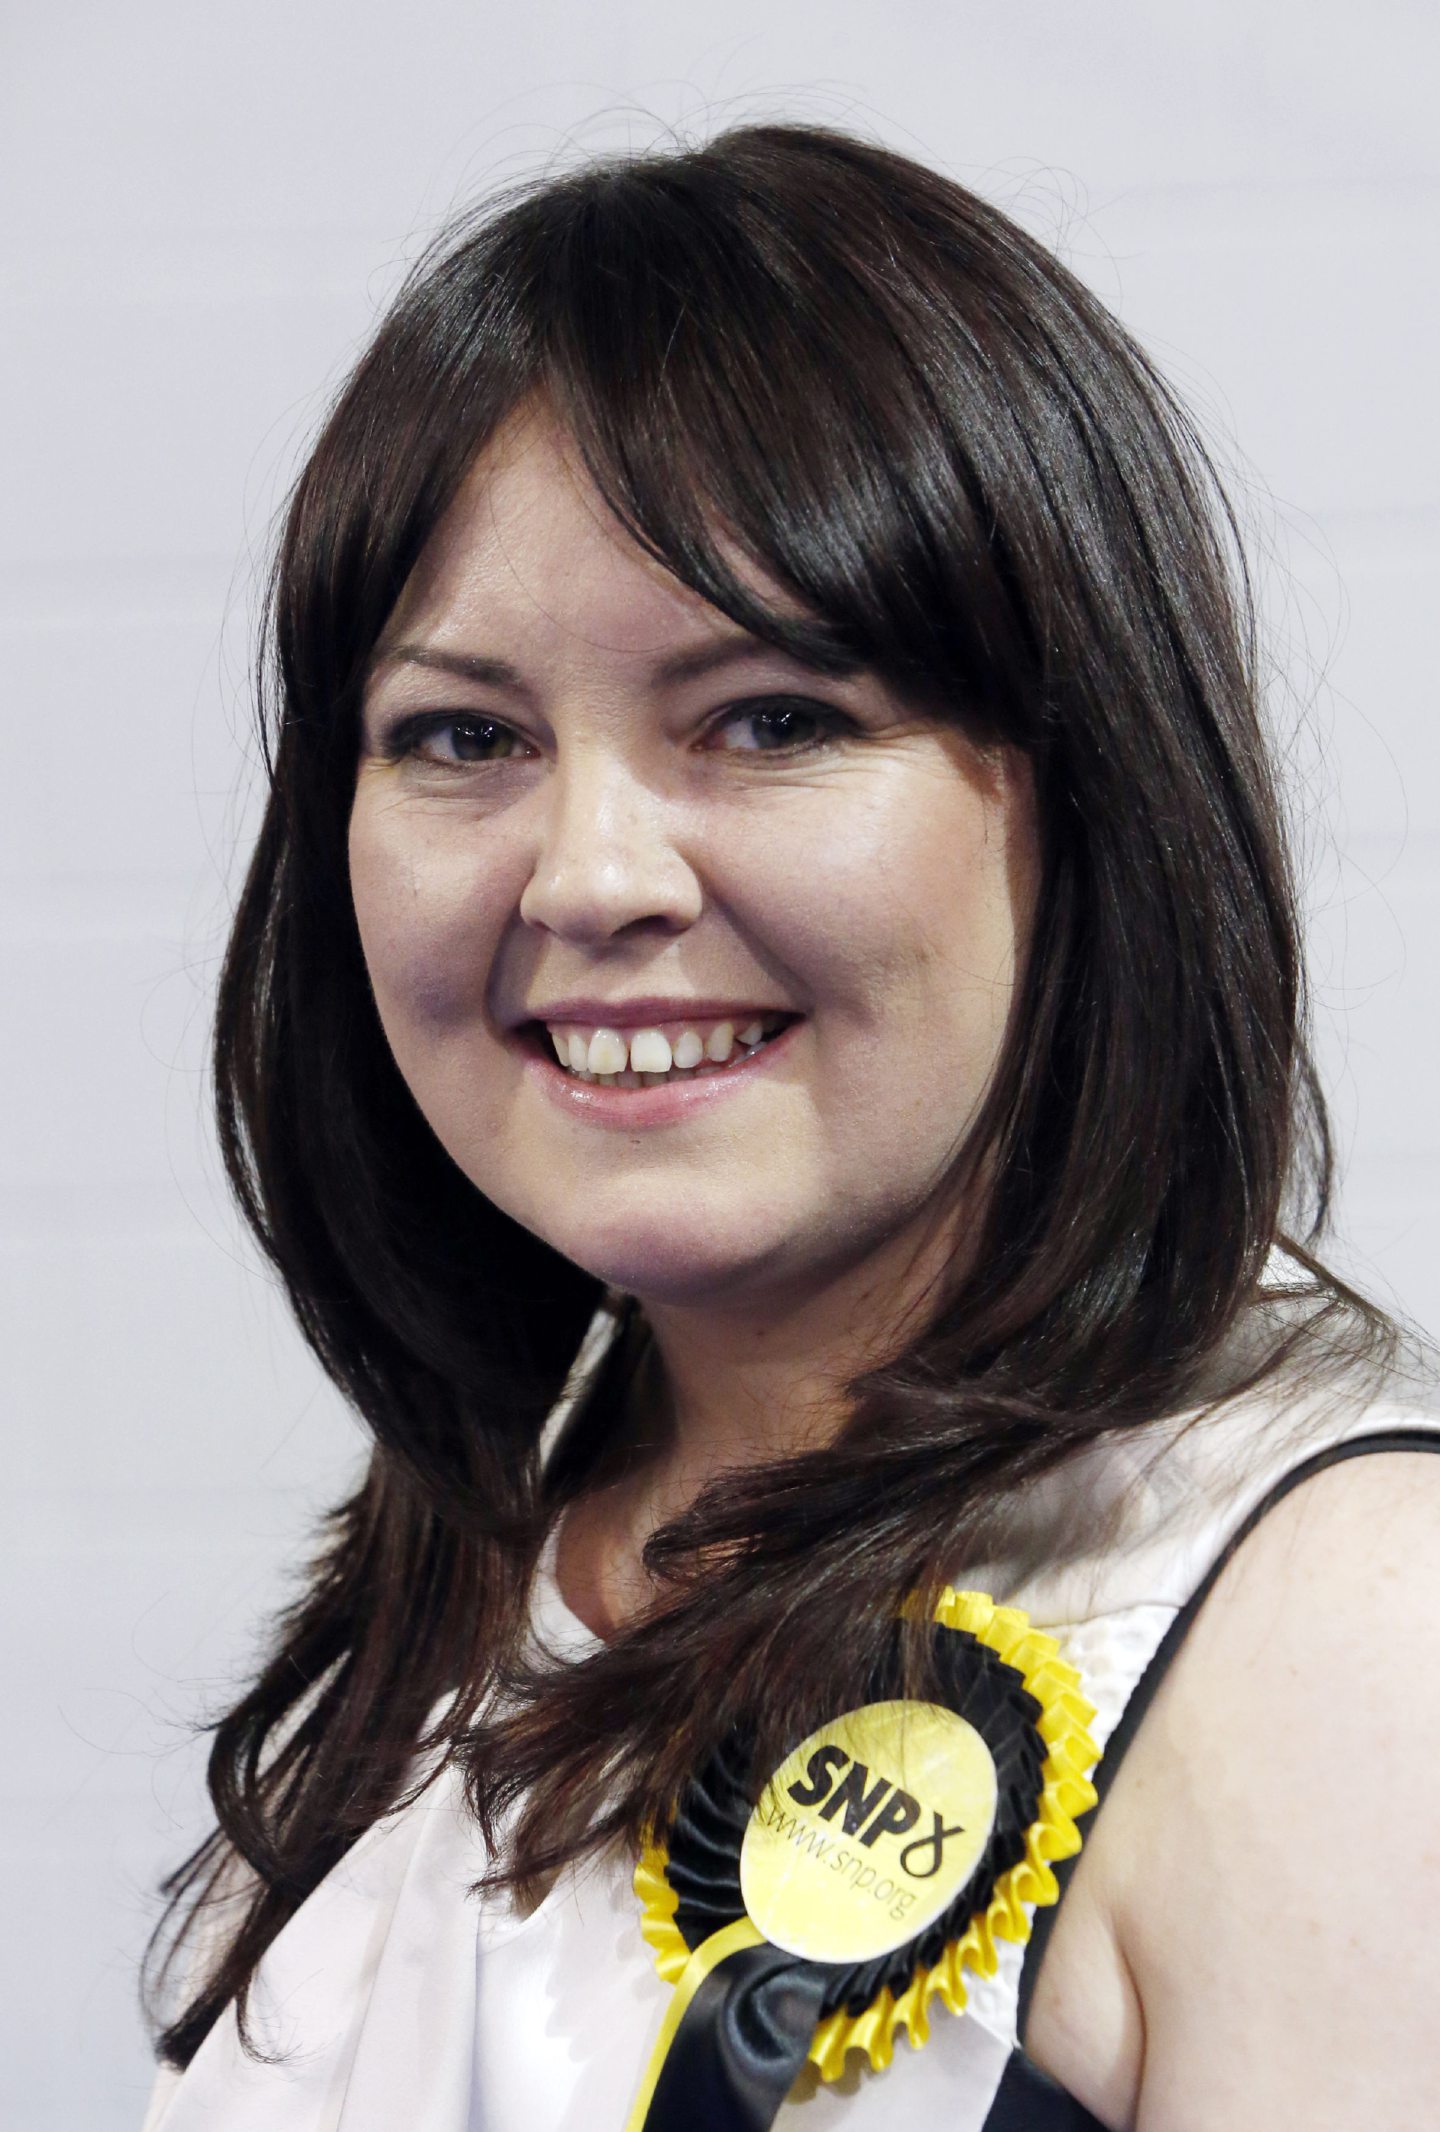 Natalie McGarry was an SNP MP.